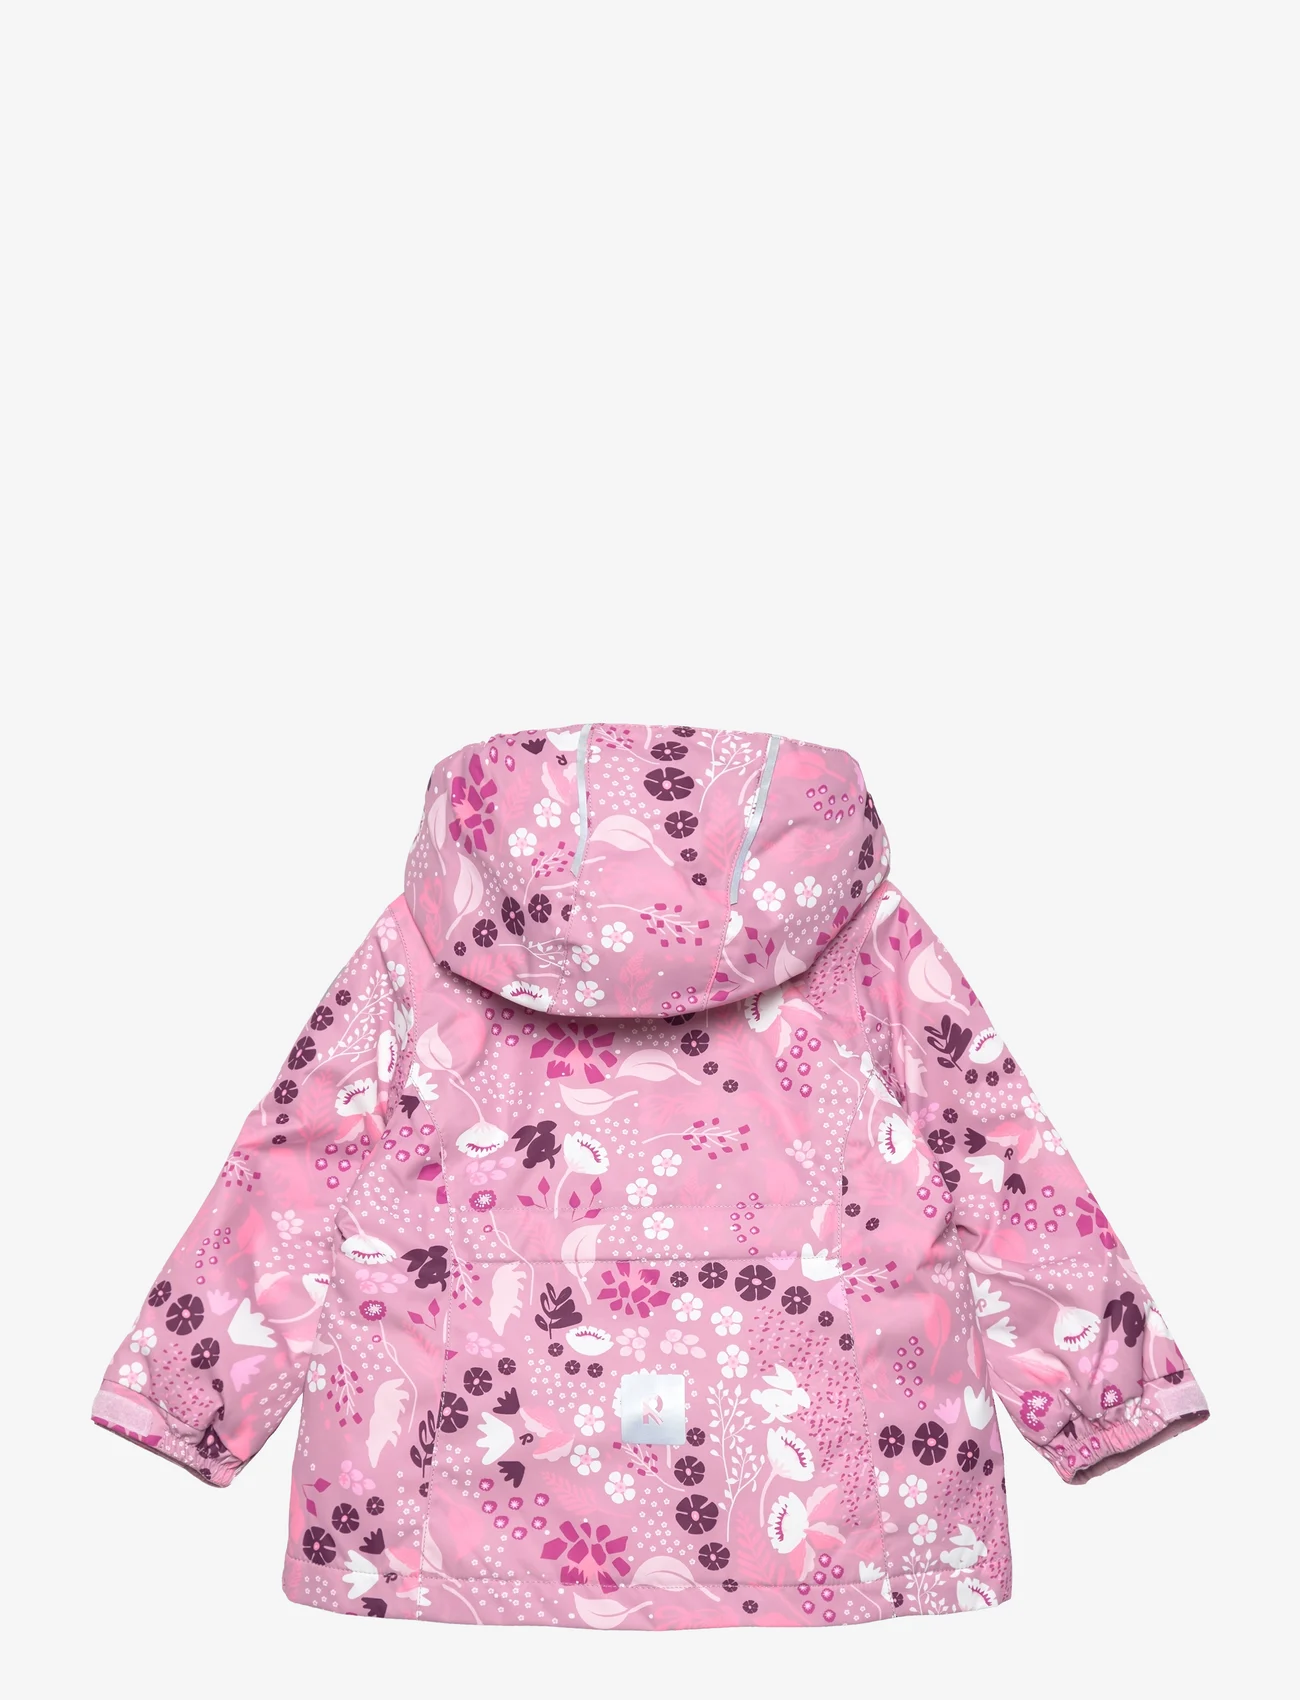 Reima - Toddlers' winter jacket Kuhmoinen - skalljakke - grey pink - 1